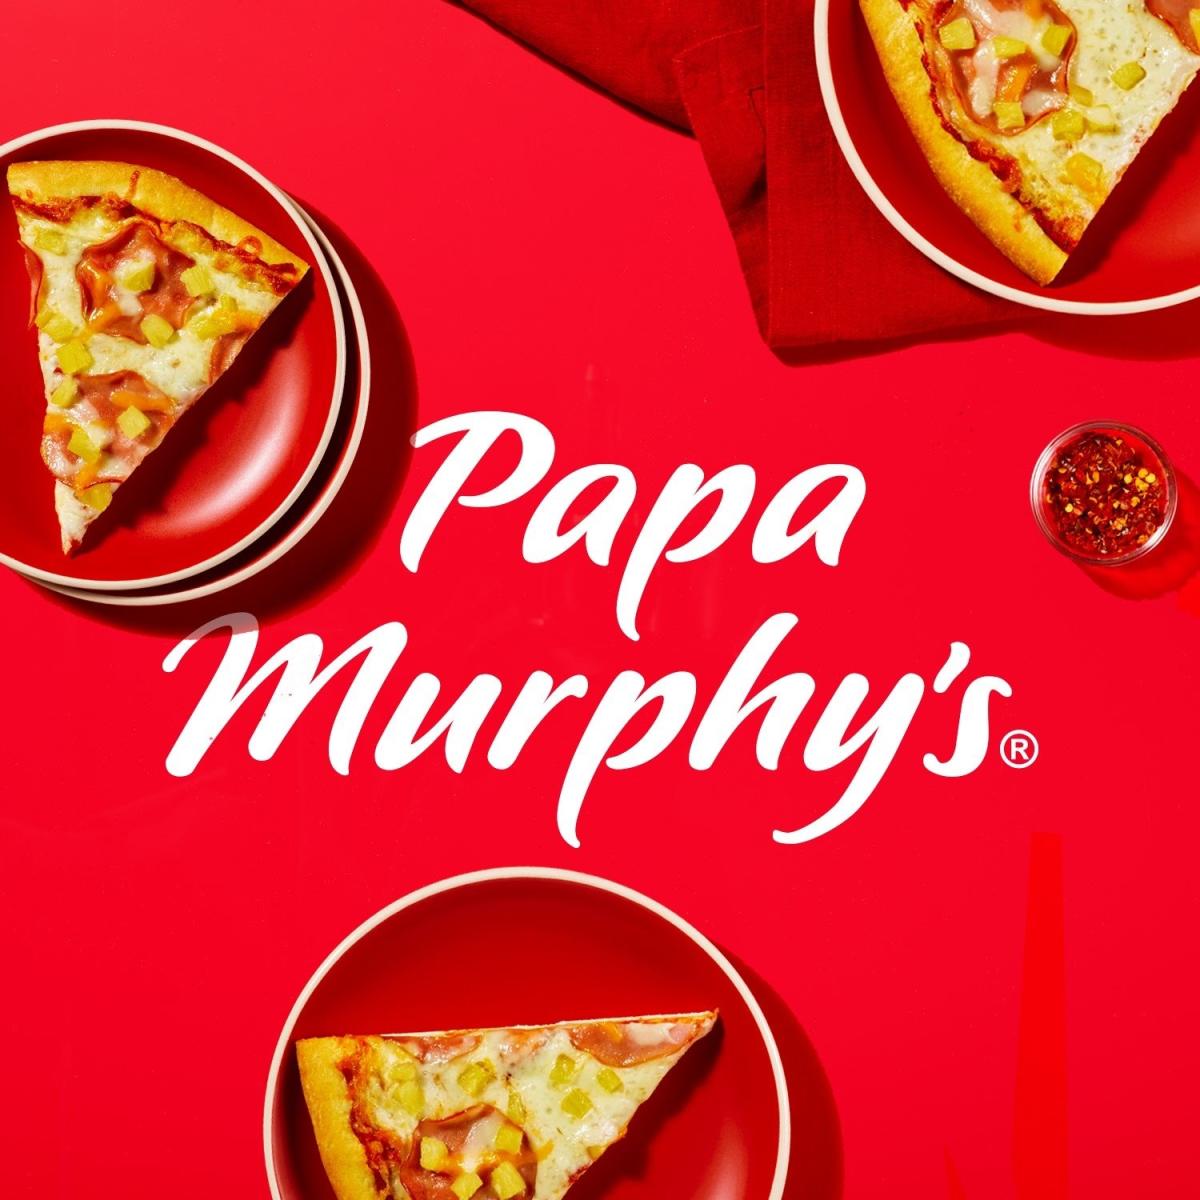 Papa Murphy's Take & Bake Pizza